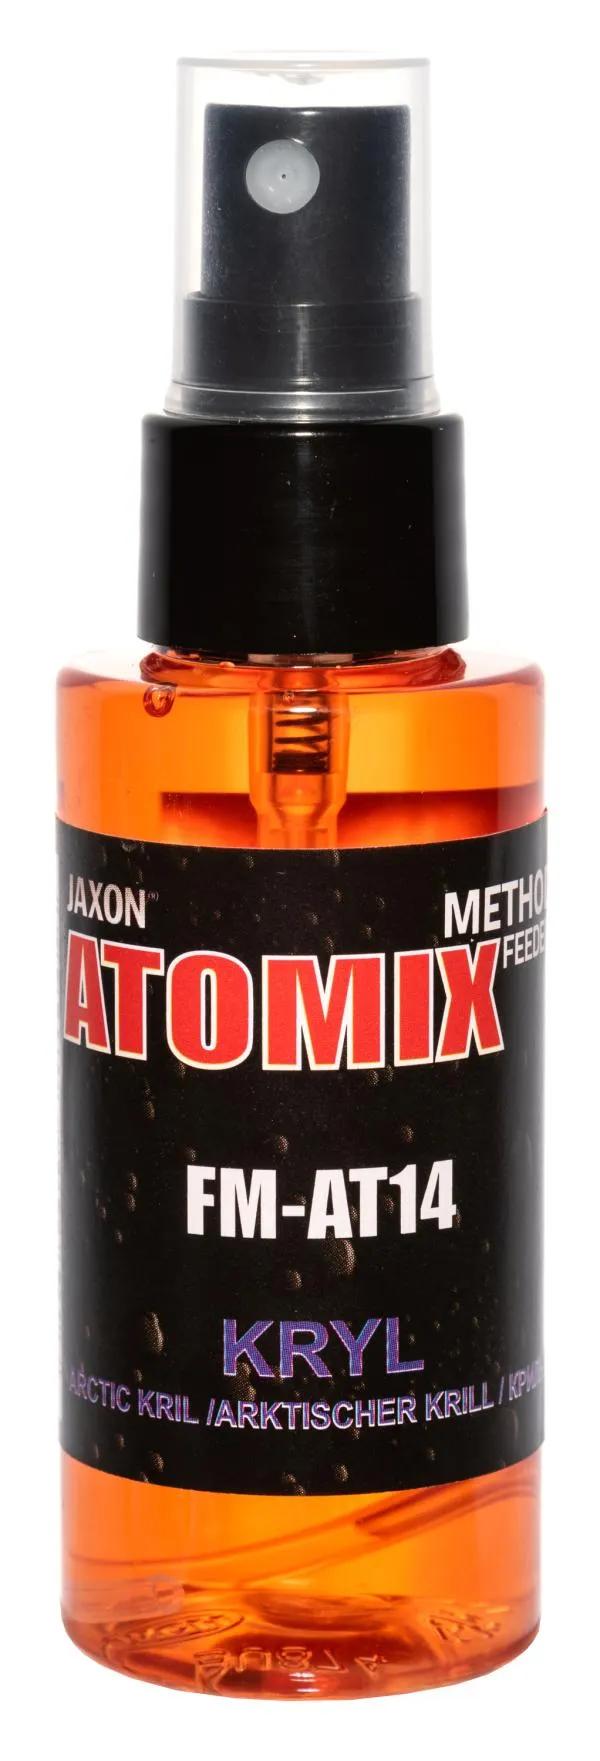 JAXON ATOMIX - ARCTIC KRILL 50g aroma